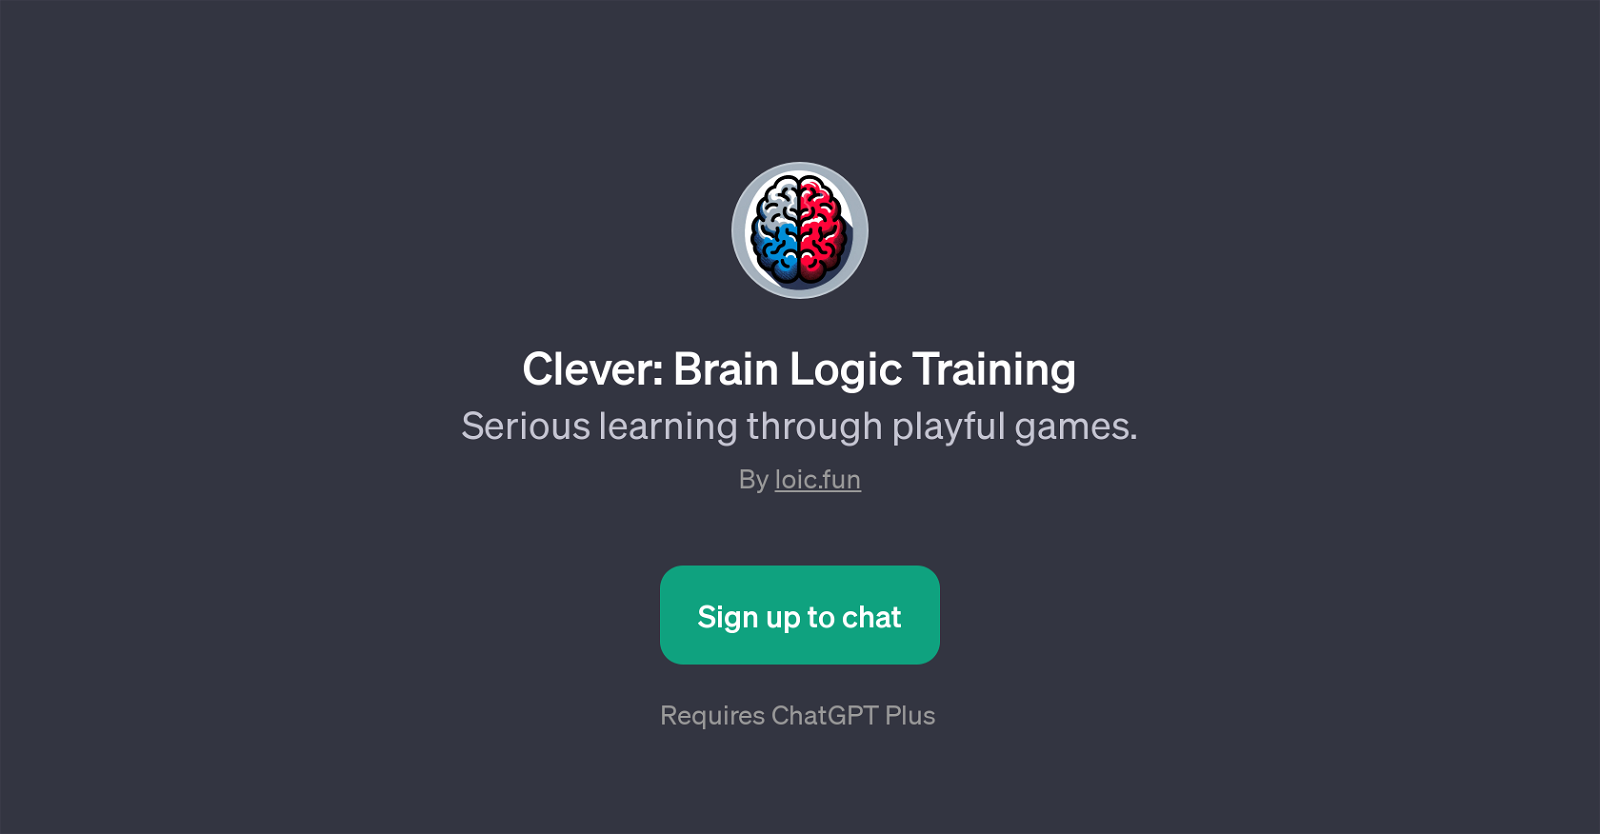 Clever: Brain Logic Training website